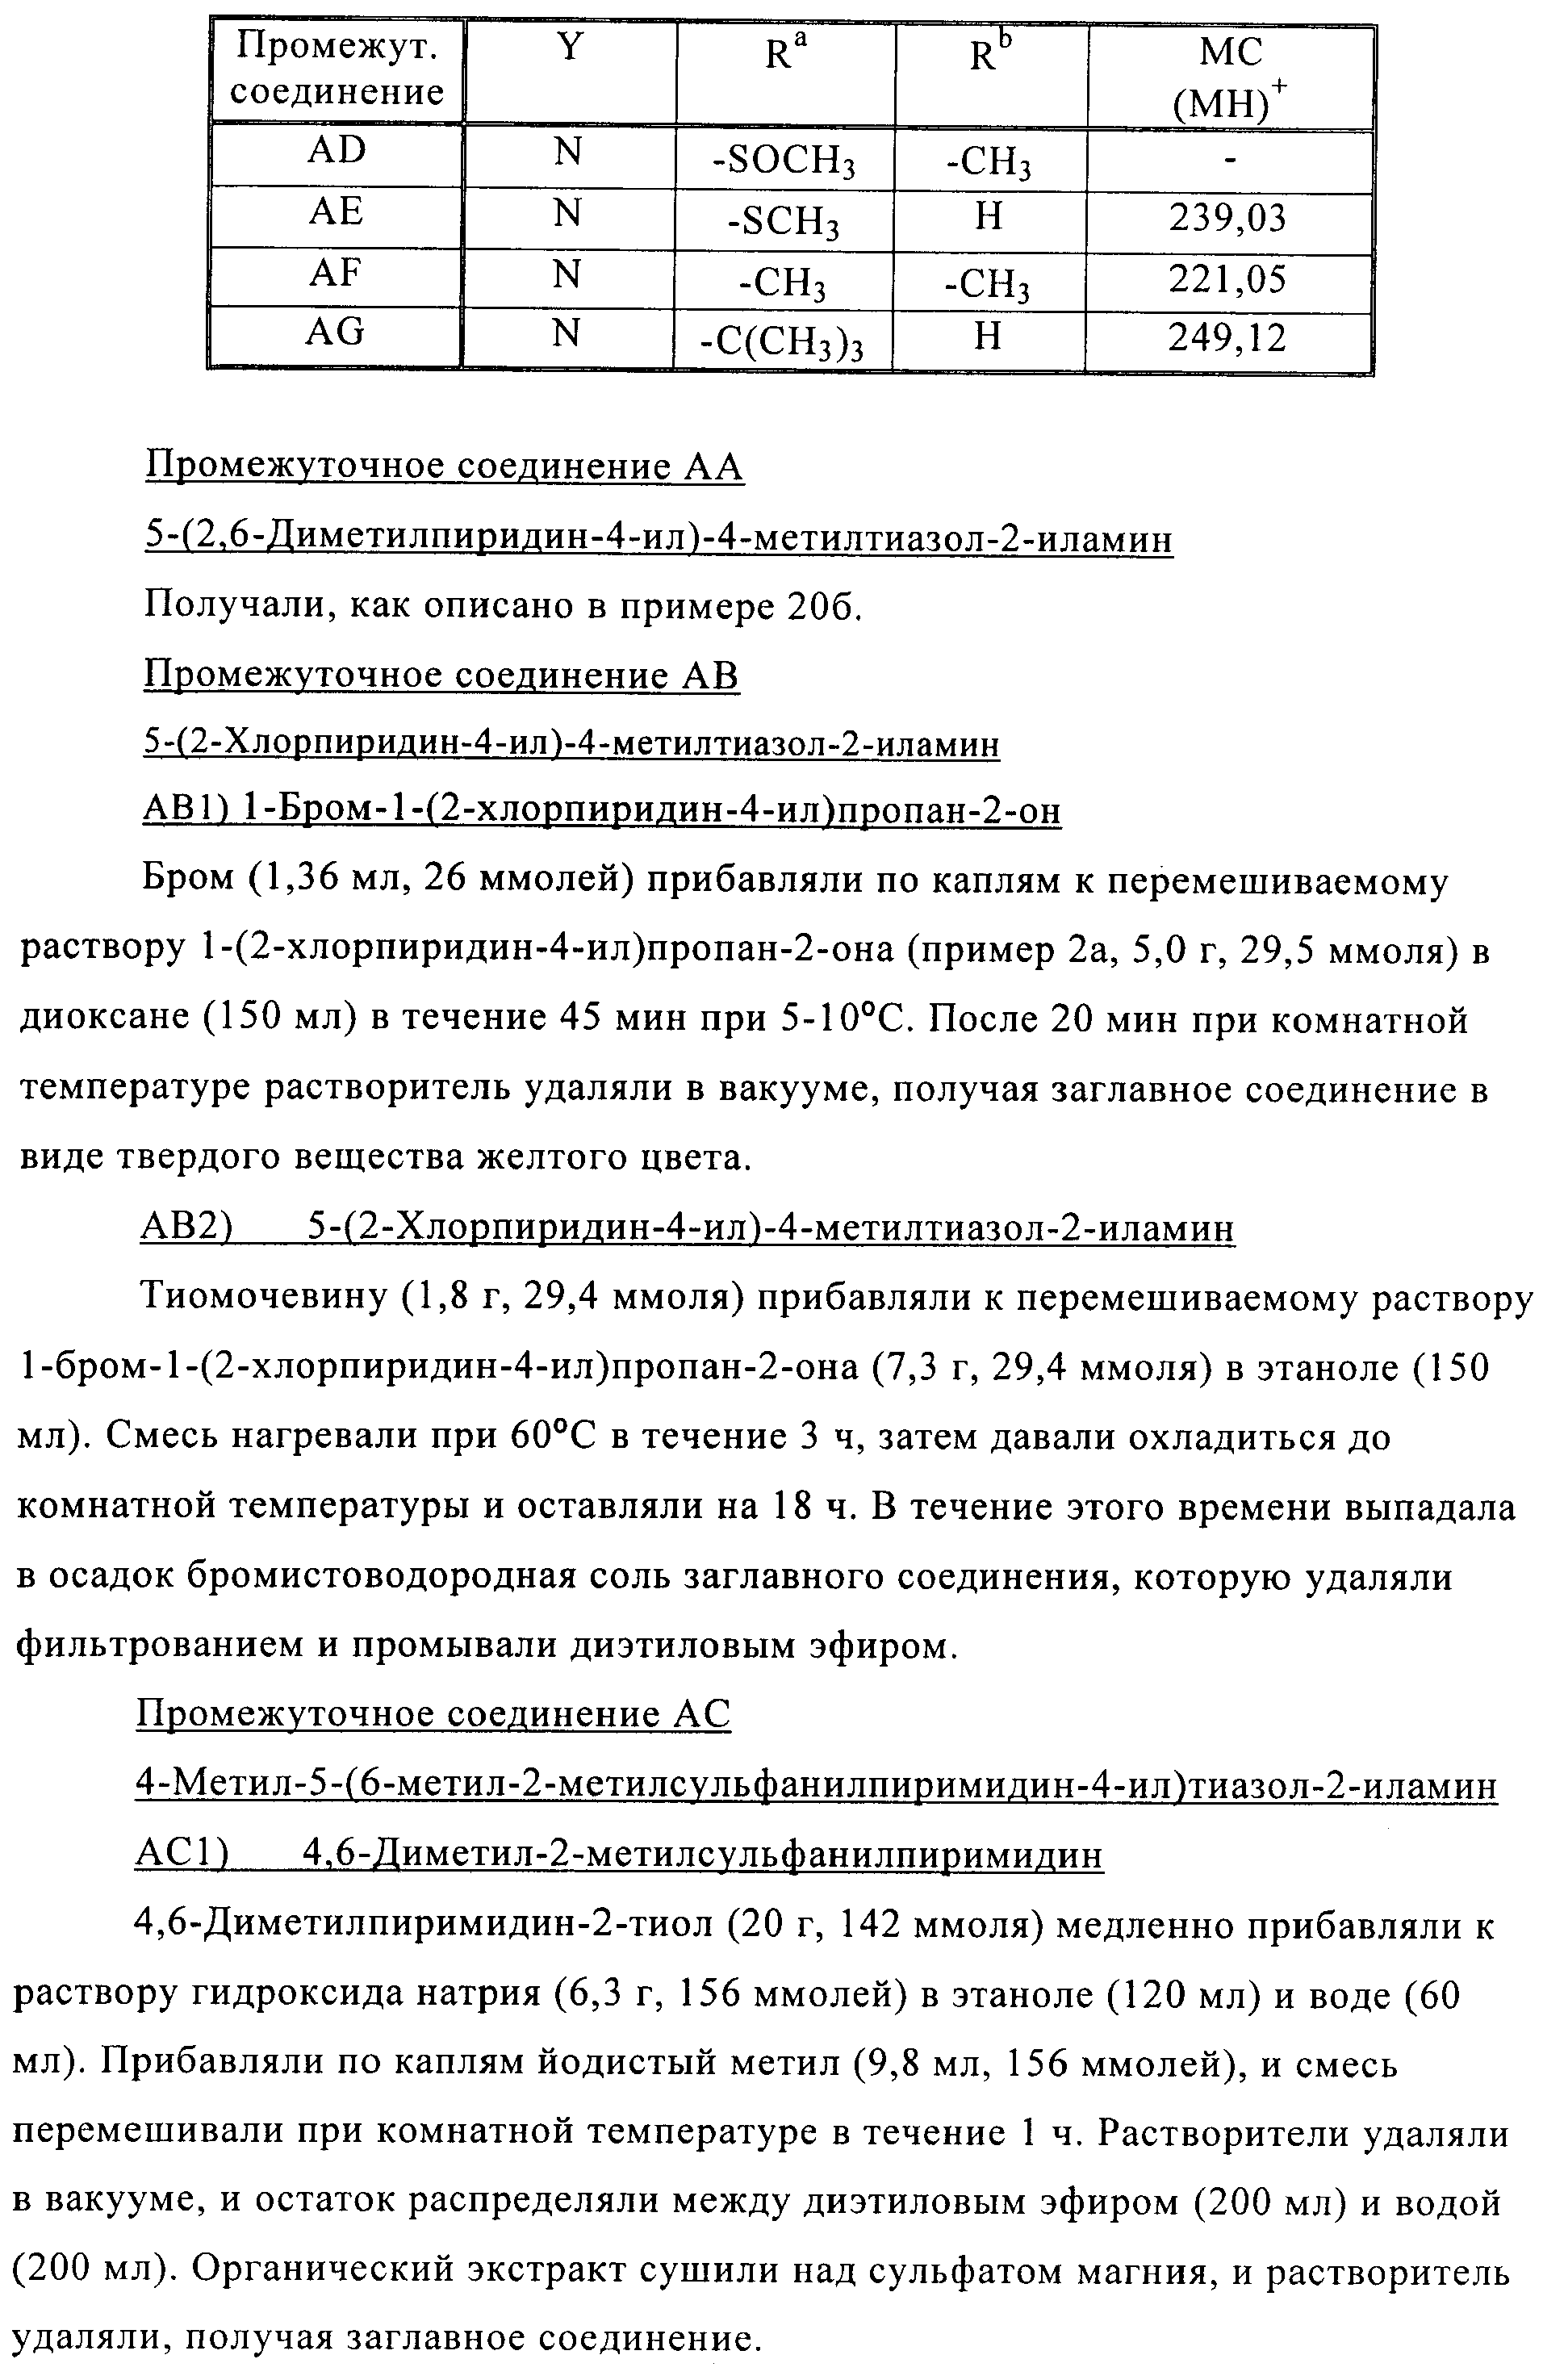 ИНГИБИТОРЫ ФОСФАТИДИЛИНОЗИТОЛ-3-КИНАЗЫ